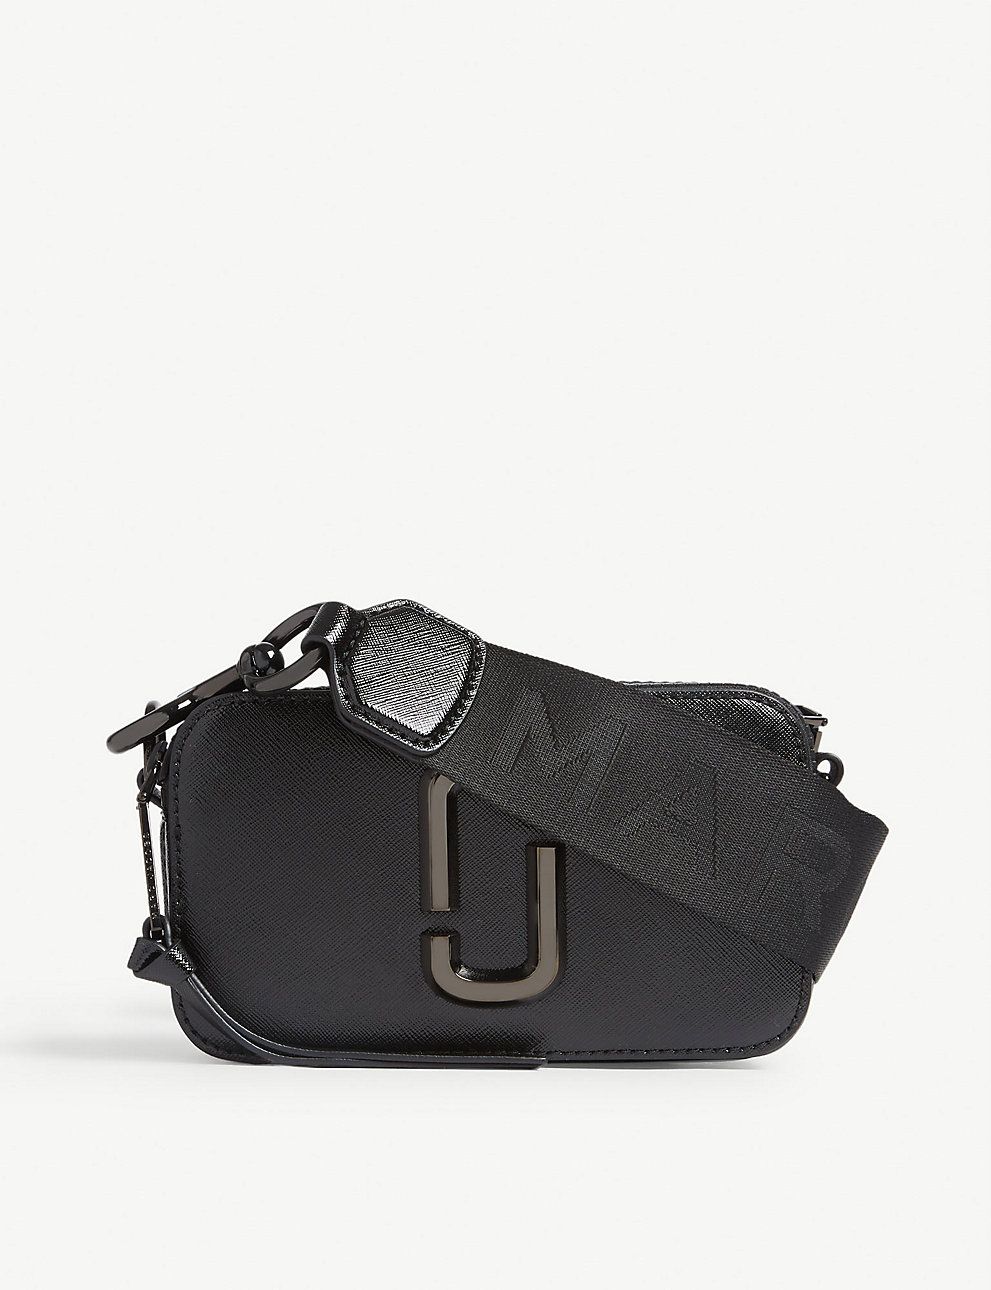 Snapshot leather cross-body bag | Selfridges